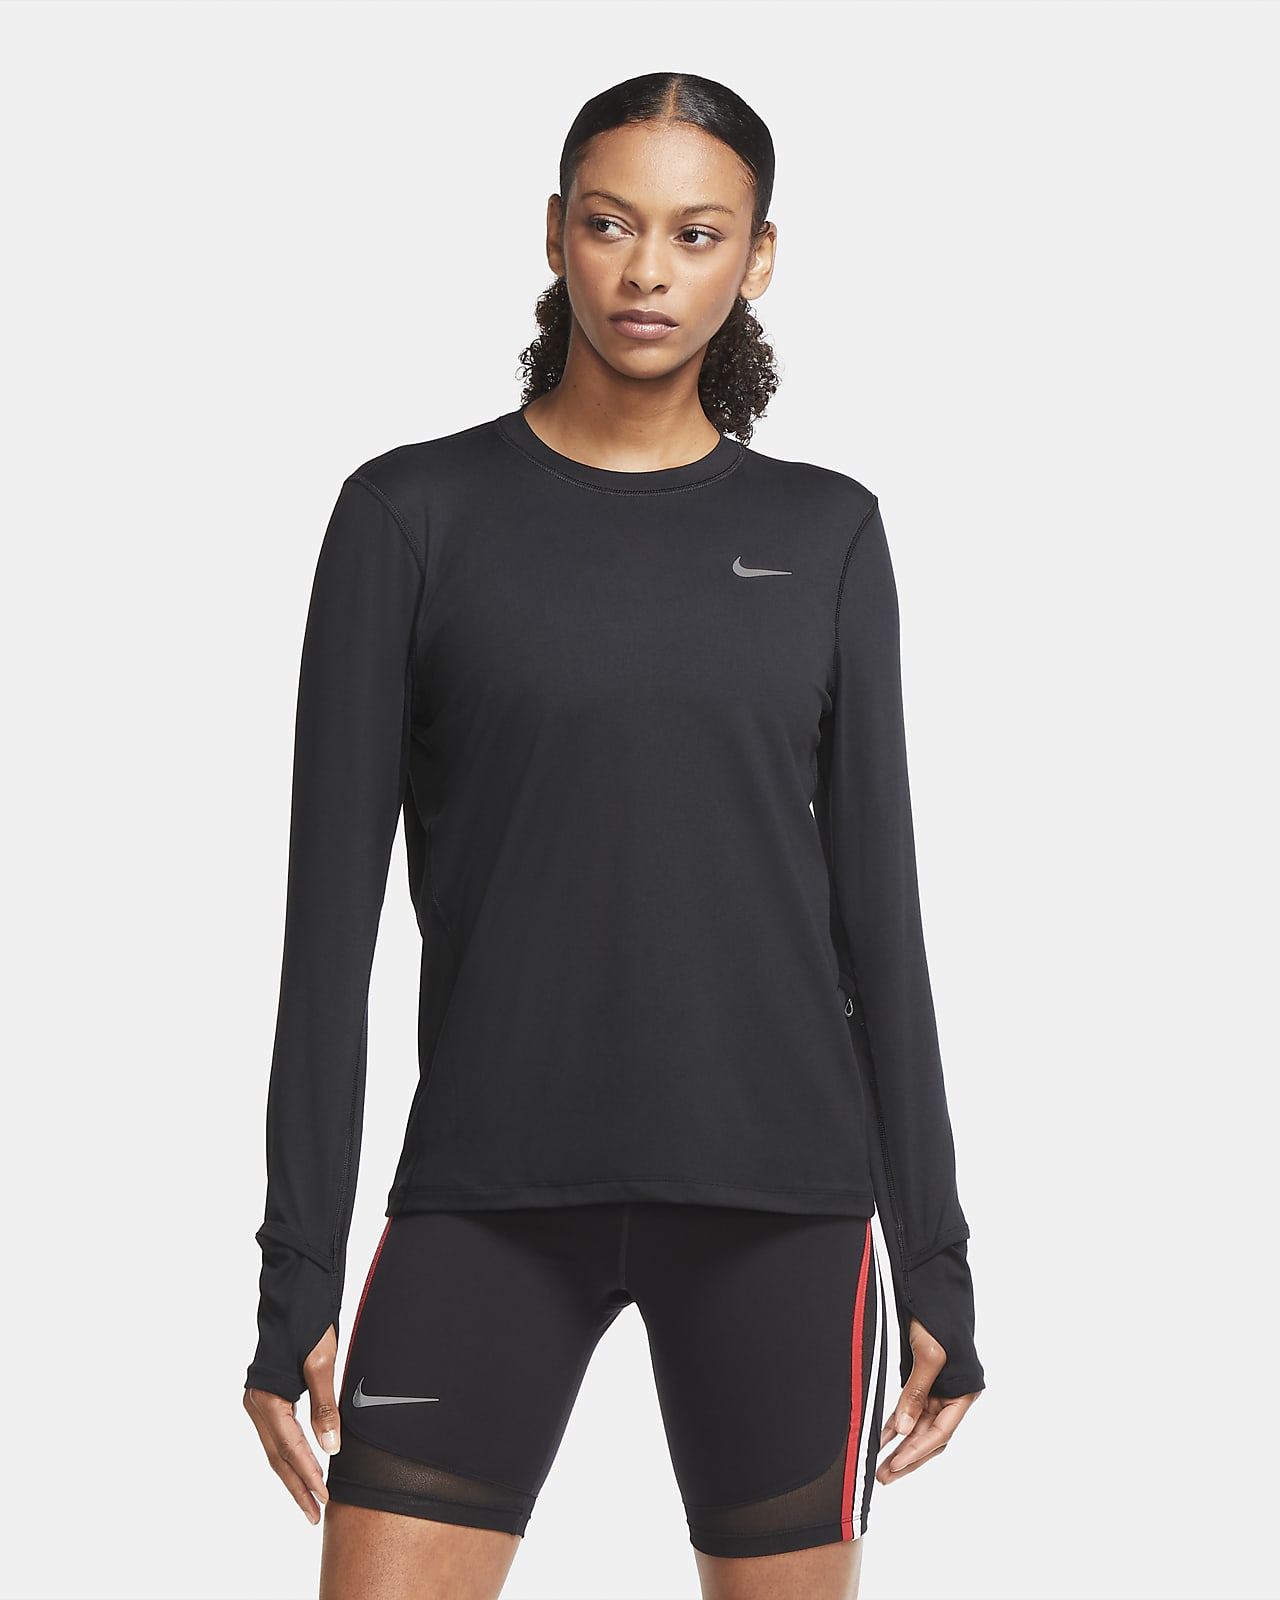 samtale regnskyl klarhed Nike Dri-FIT Women's Running Crew. Nike LU